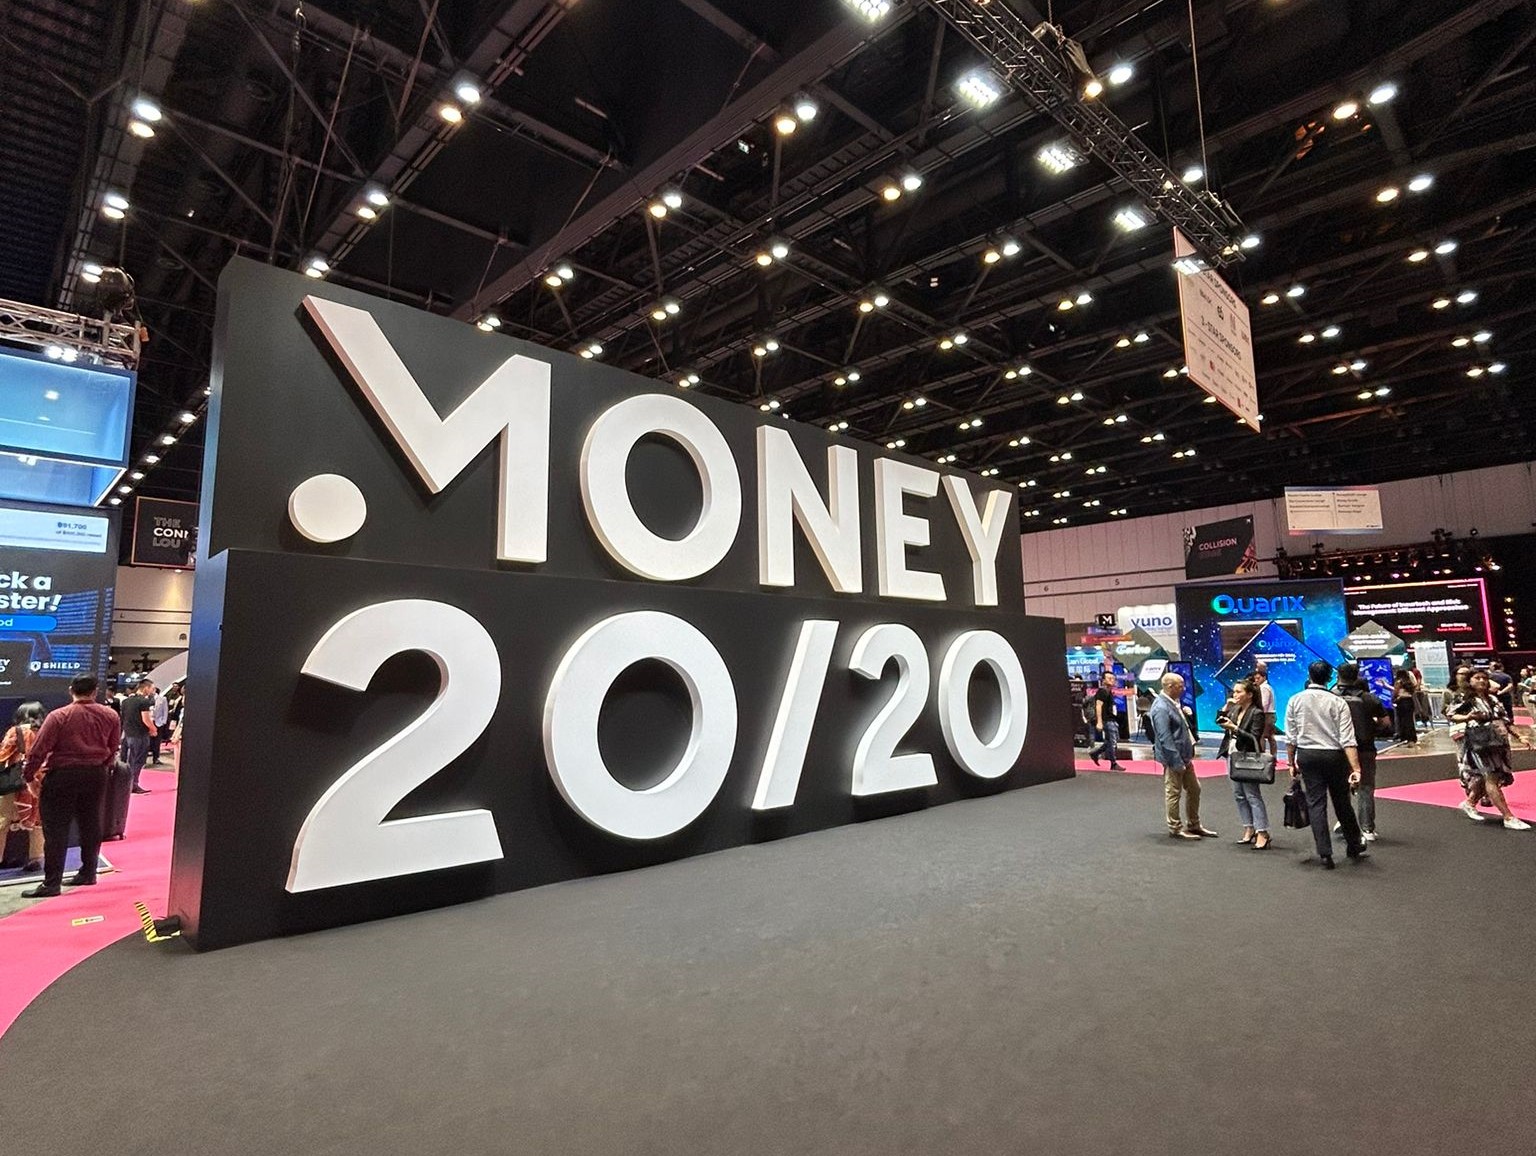 Money20/20 Bangkok: should you attend next year?